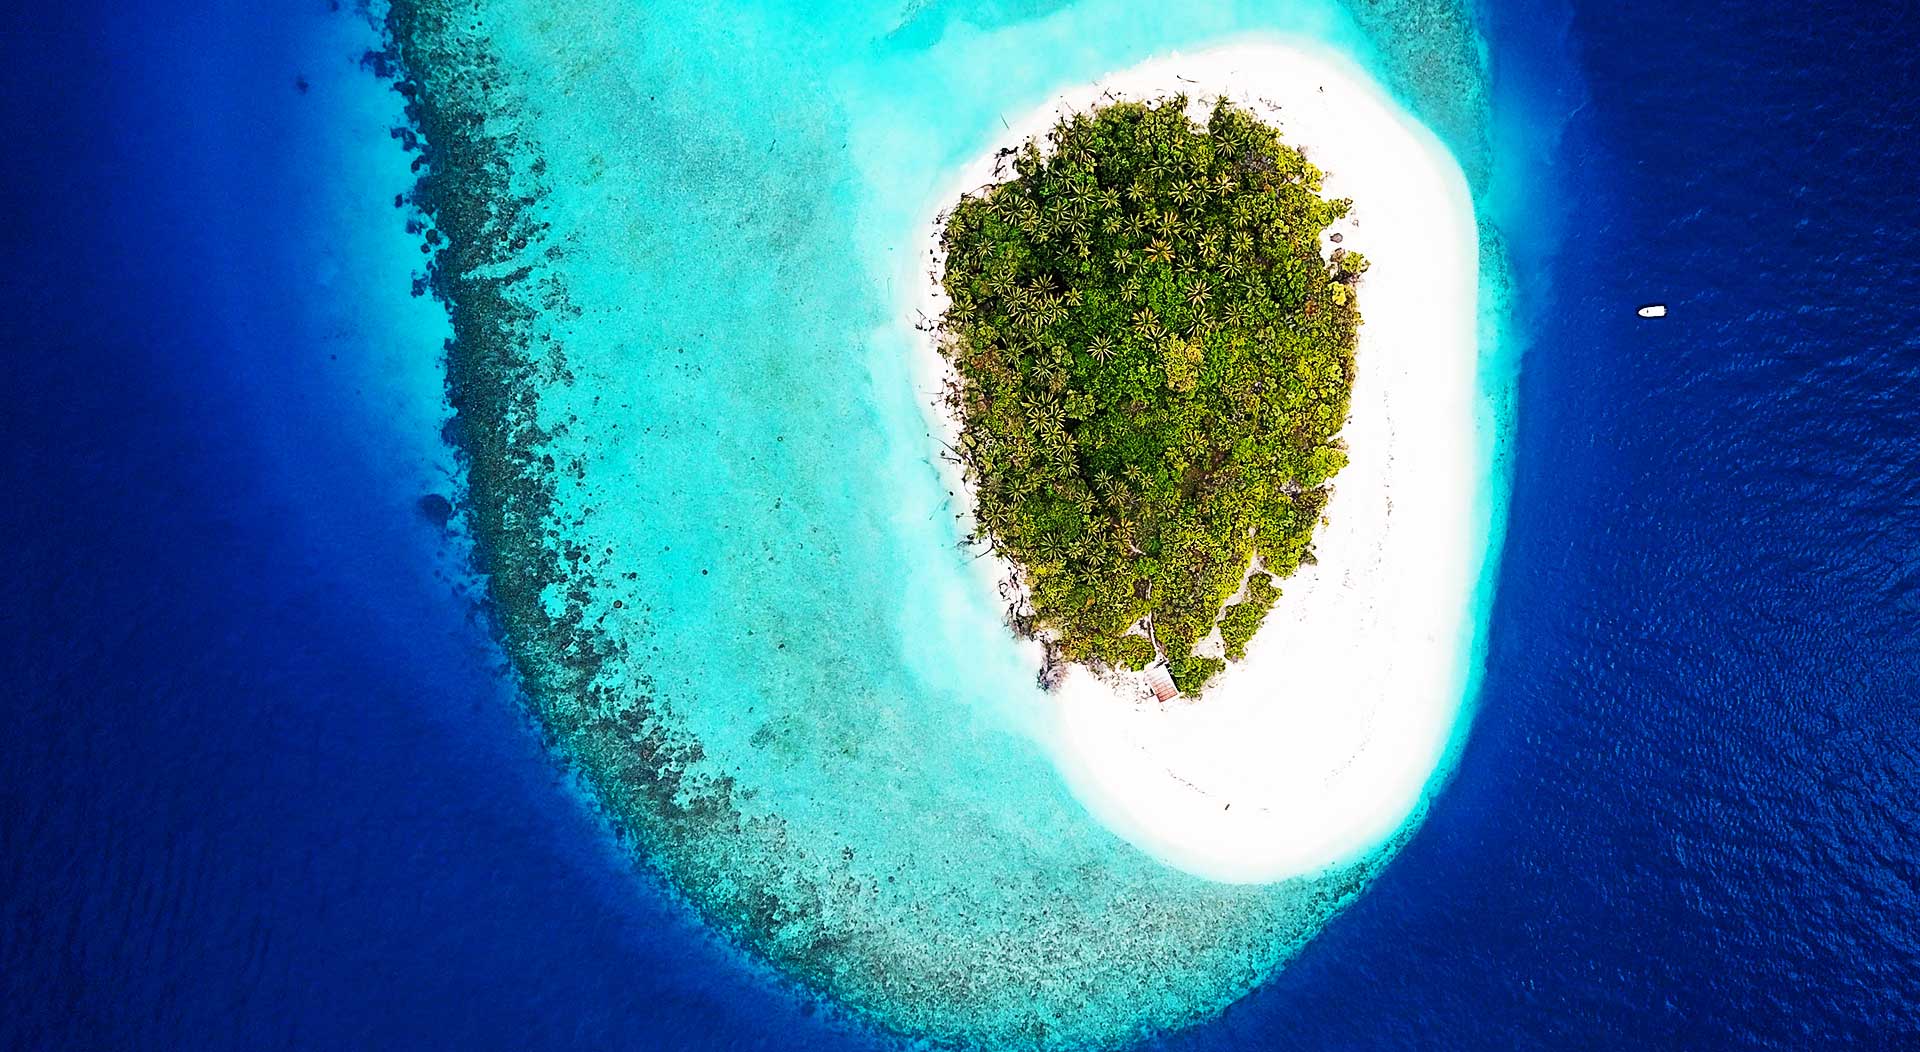 Maldive, Oceano Indiano: Crociera in catamarano